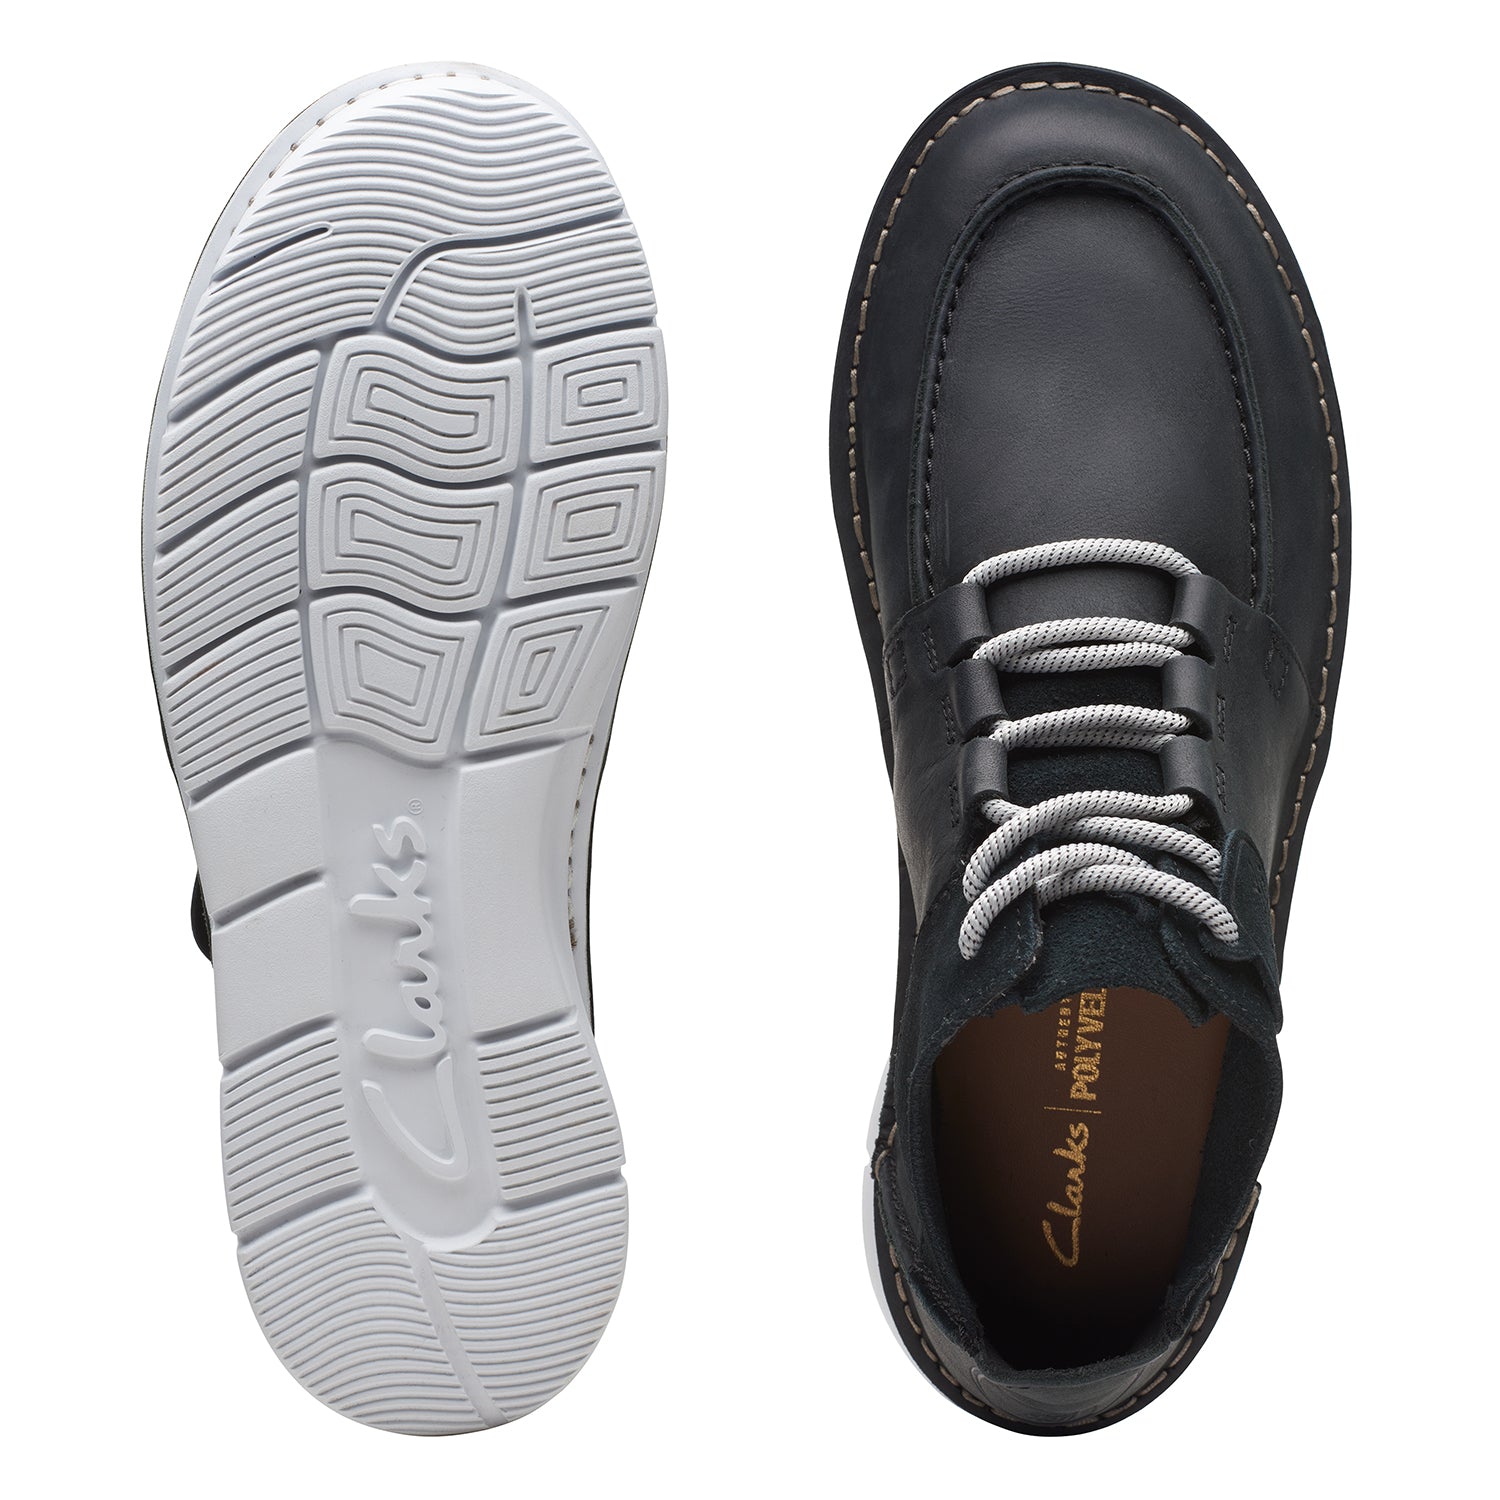 Clarks Colehill Mid Boots - Black Combi - 261677427 - G Width (Standard Fit)